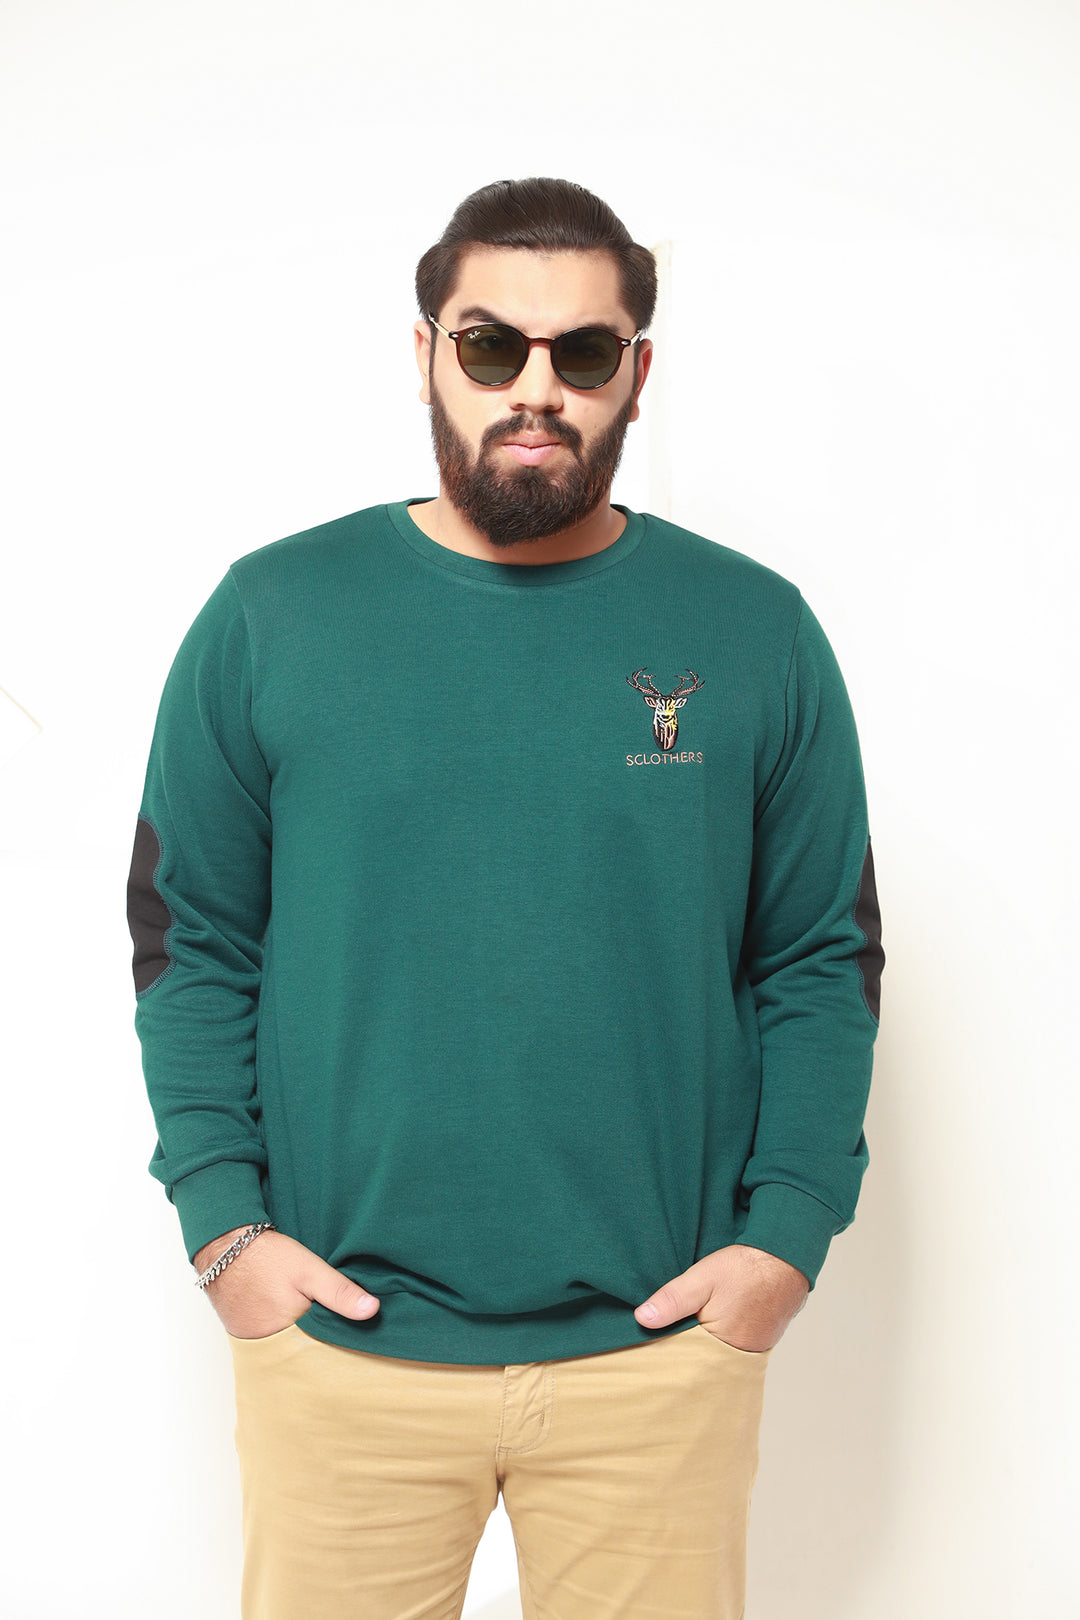 Embroidery Sweatshirts in Pakistan